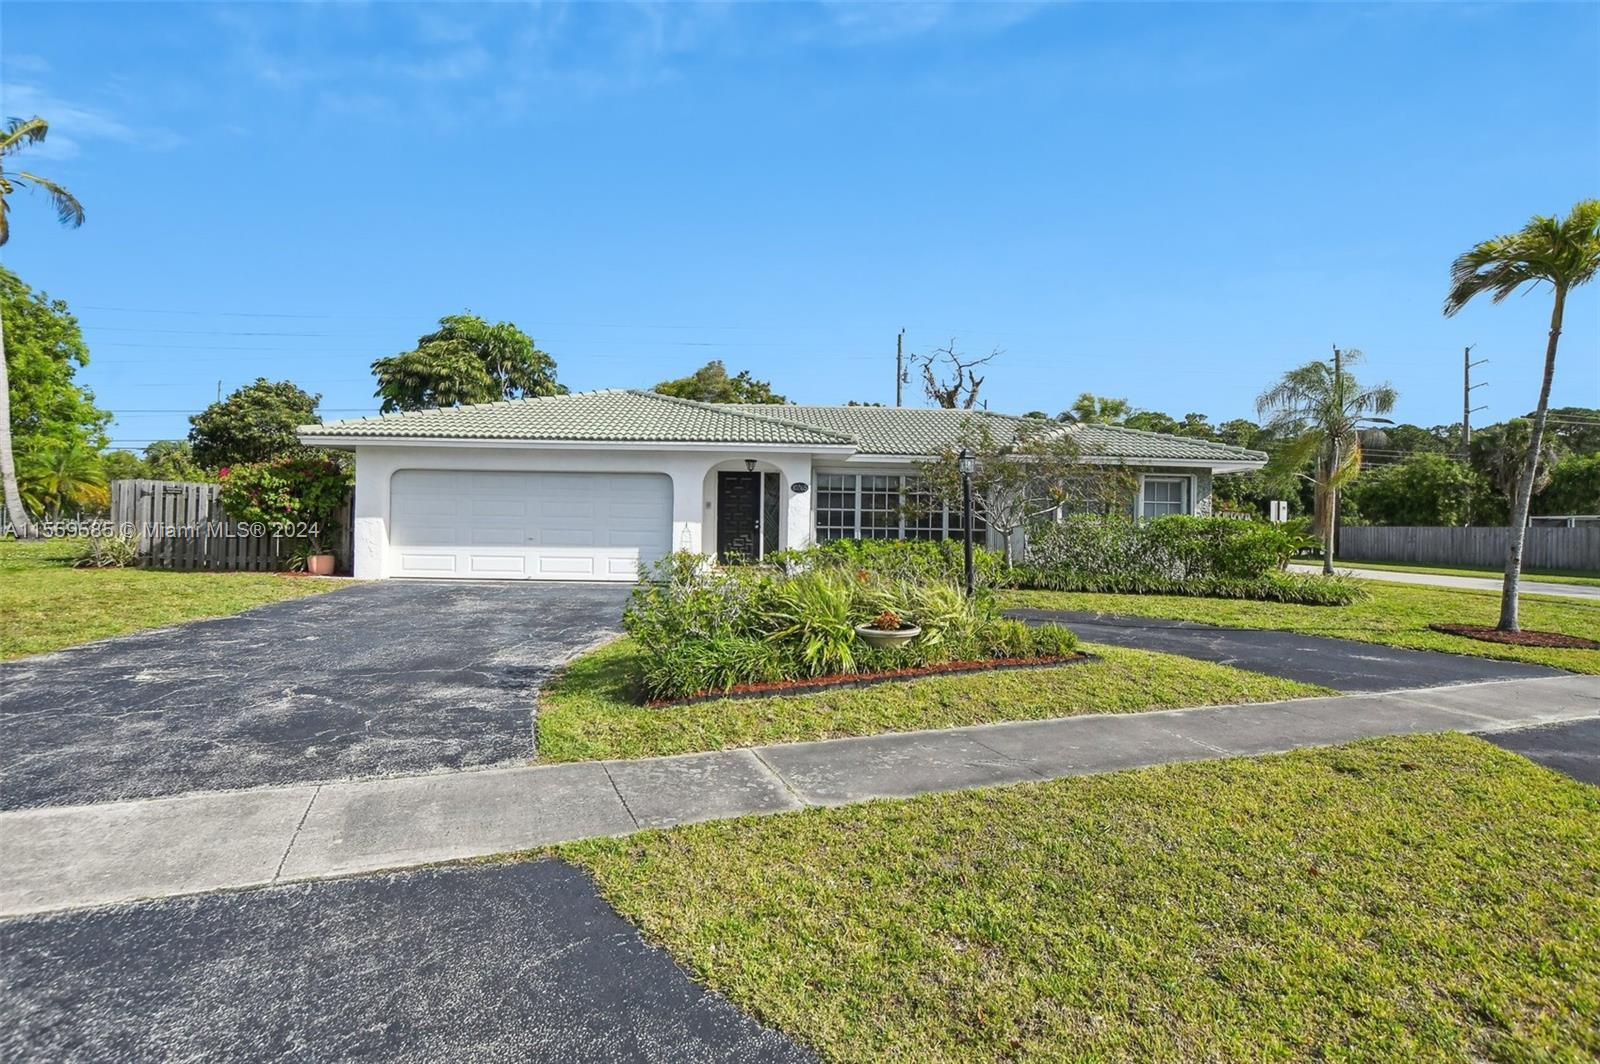 Property for Sale at 10265 Dorchester Dr, Boca Raton, Broward County, Florida - Bedrooms: 4 
Bathrooms: 3  - $655,000